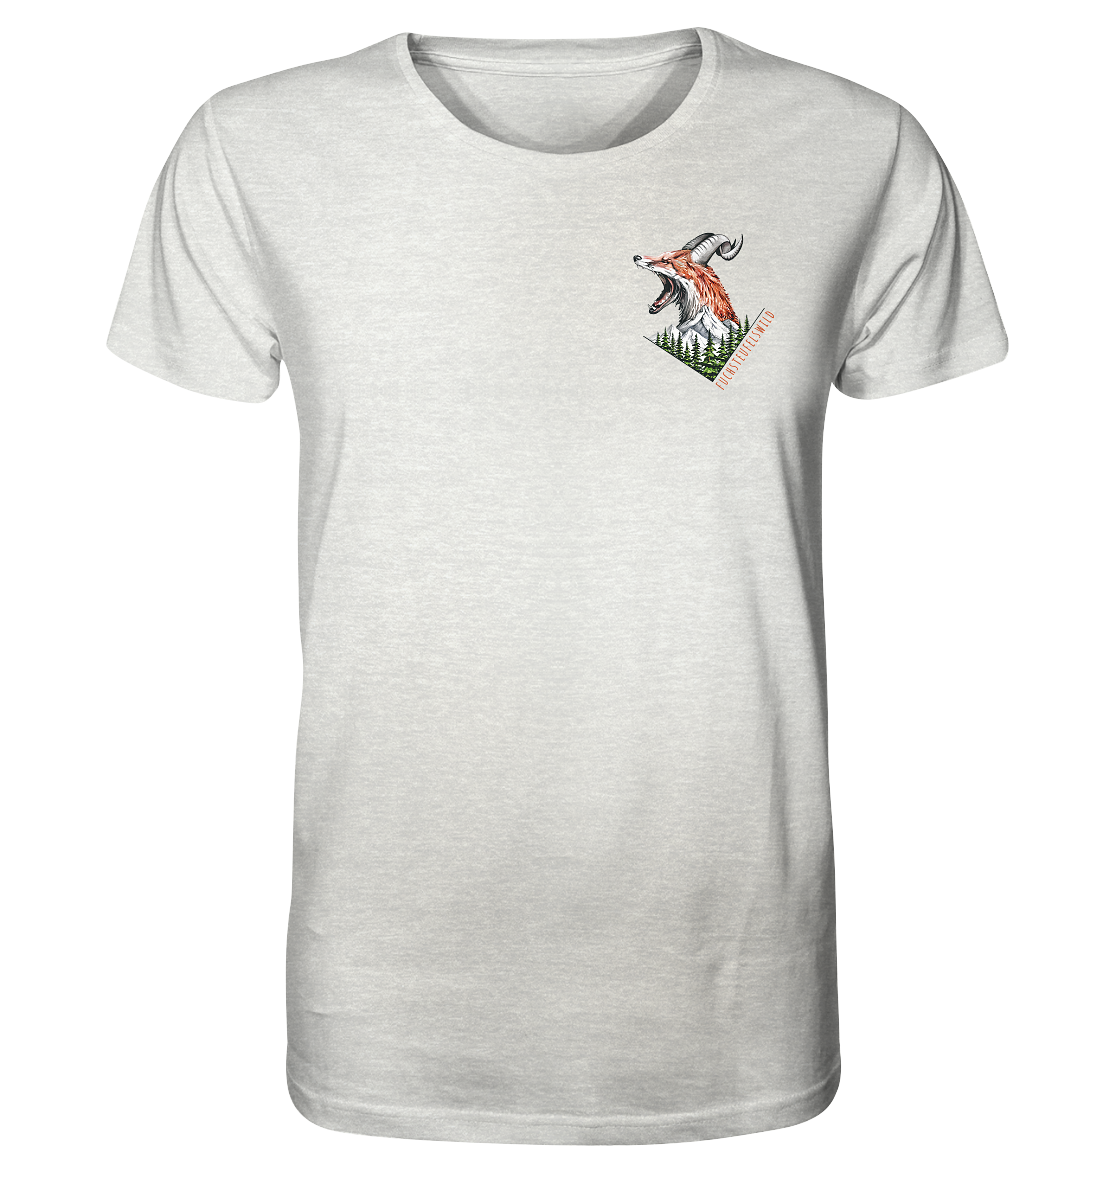 front-organic-shirt-meliert-f2f5f3-1116x-2.png